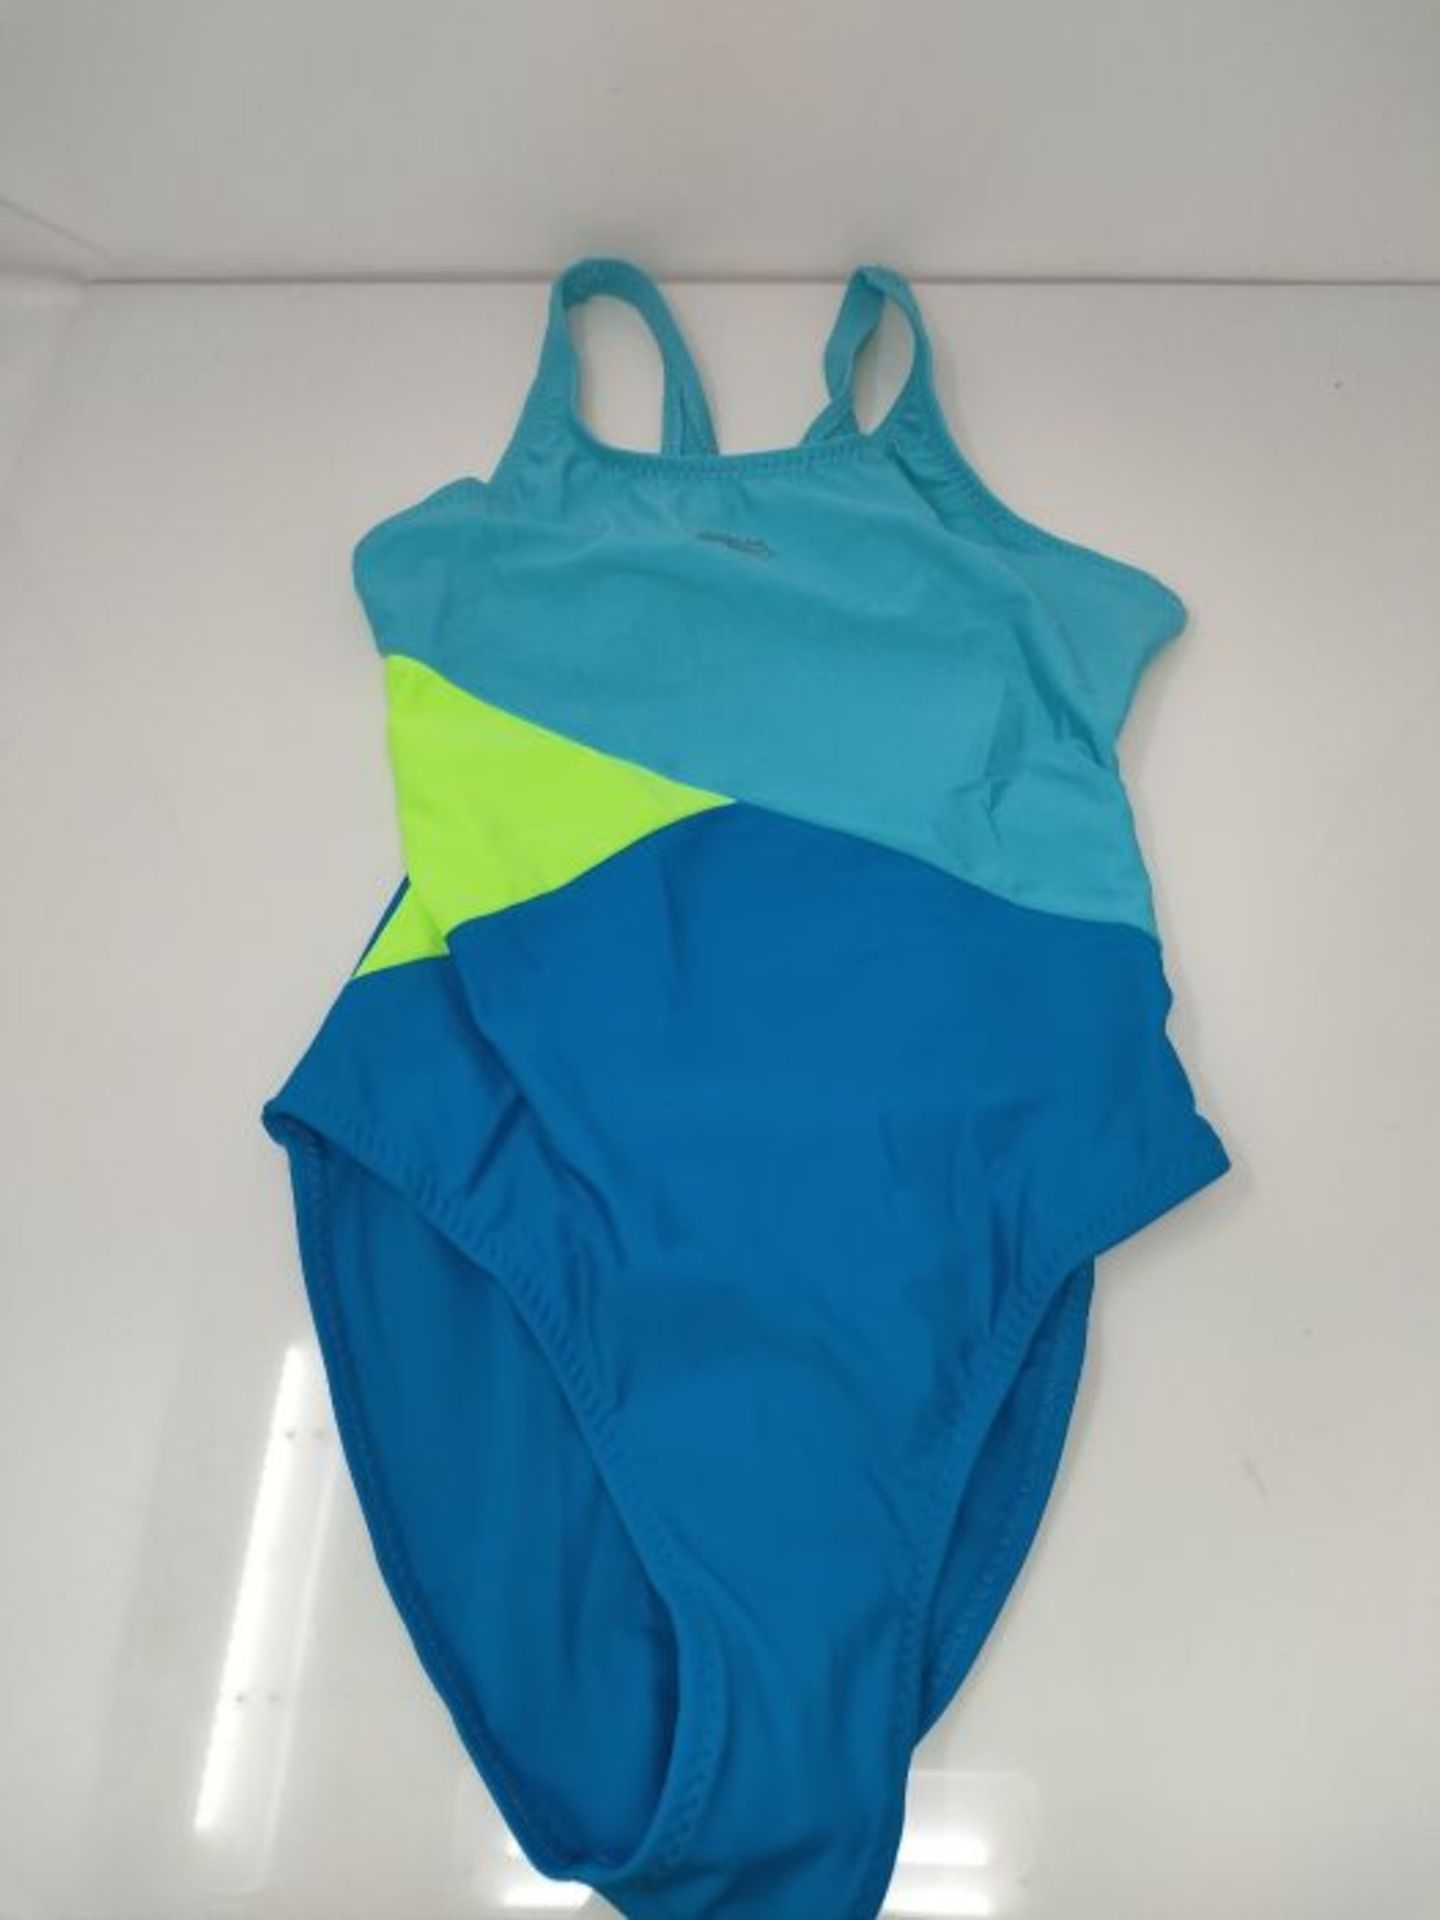 Aqua Speed Pola Girls' One-Piece Swimsuit 104-158 UV Protection Opaque Chlorine Resist - Image 2 of 3